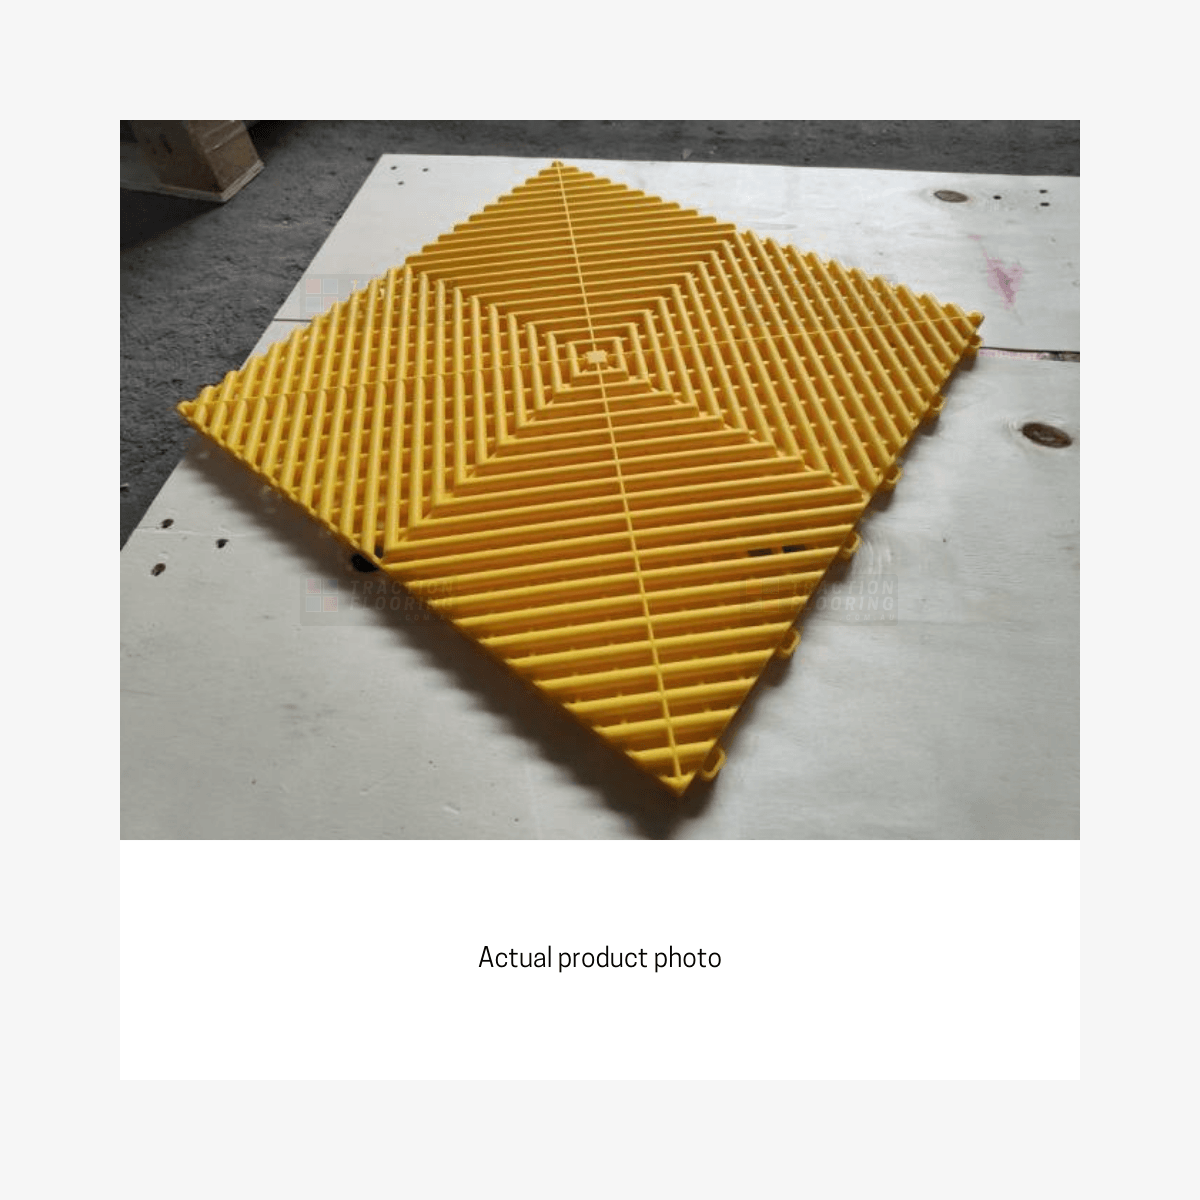 ULTRAGRID Garage Floor Tile 400x400x18mm, Speed Yellow